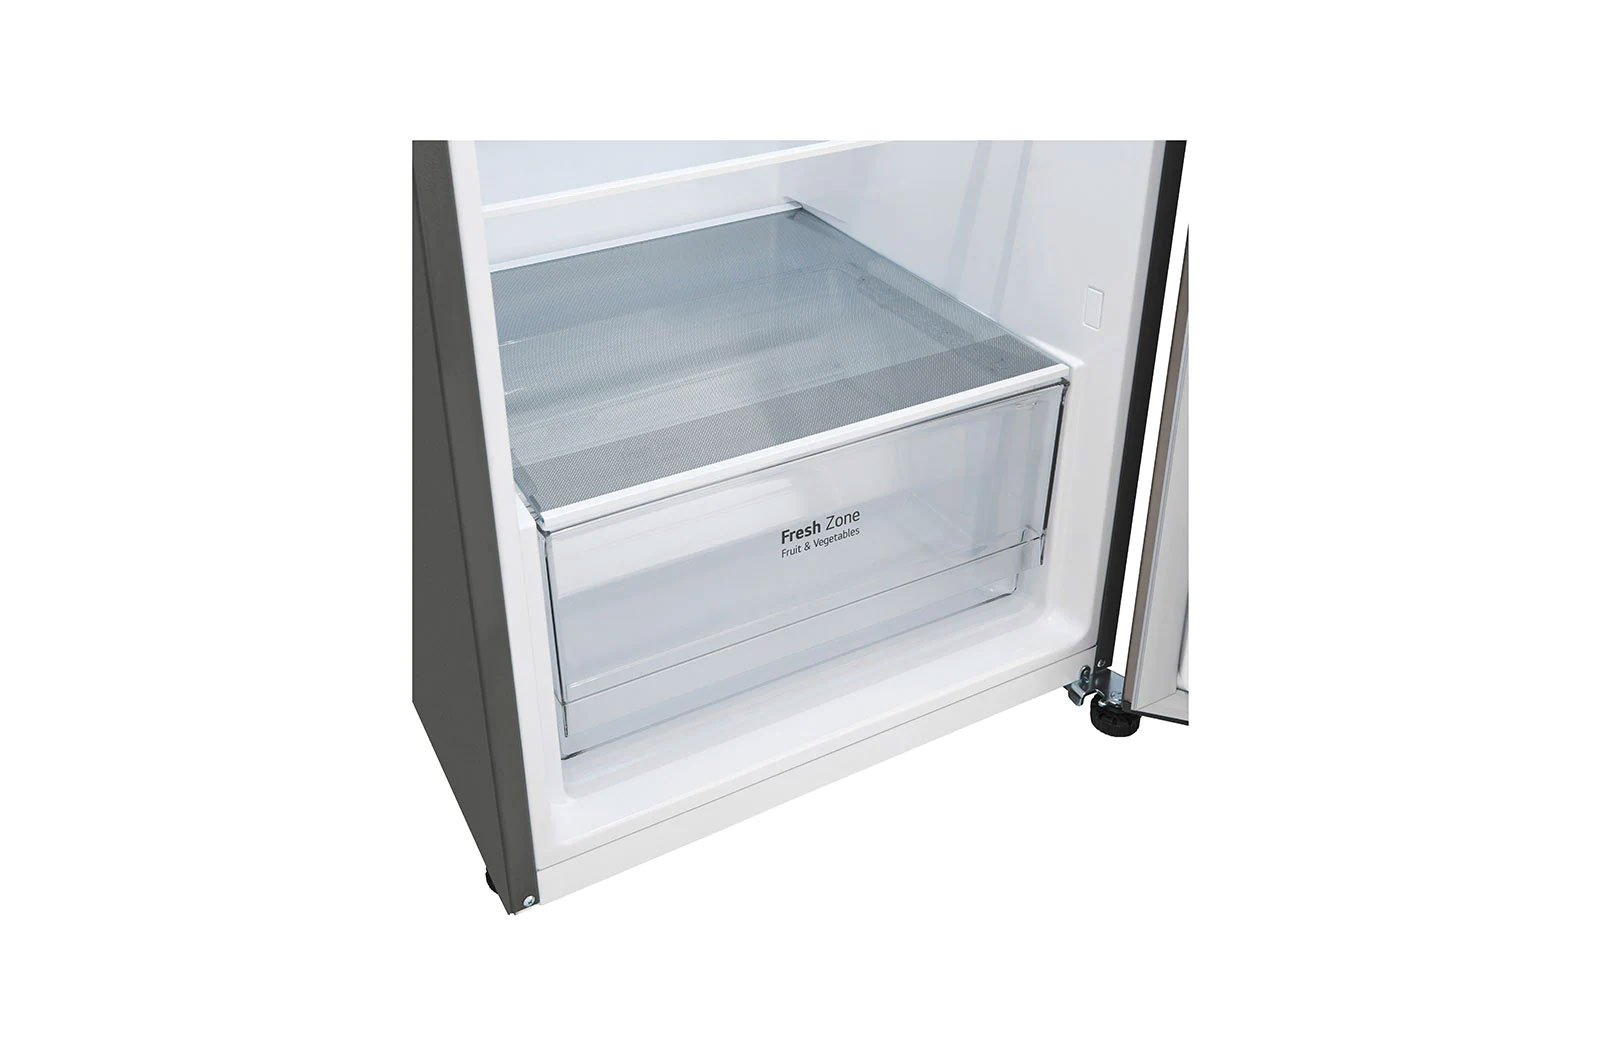 Tủ lạnh LG Inverter 315L GN-M312PS